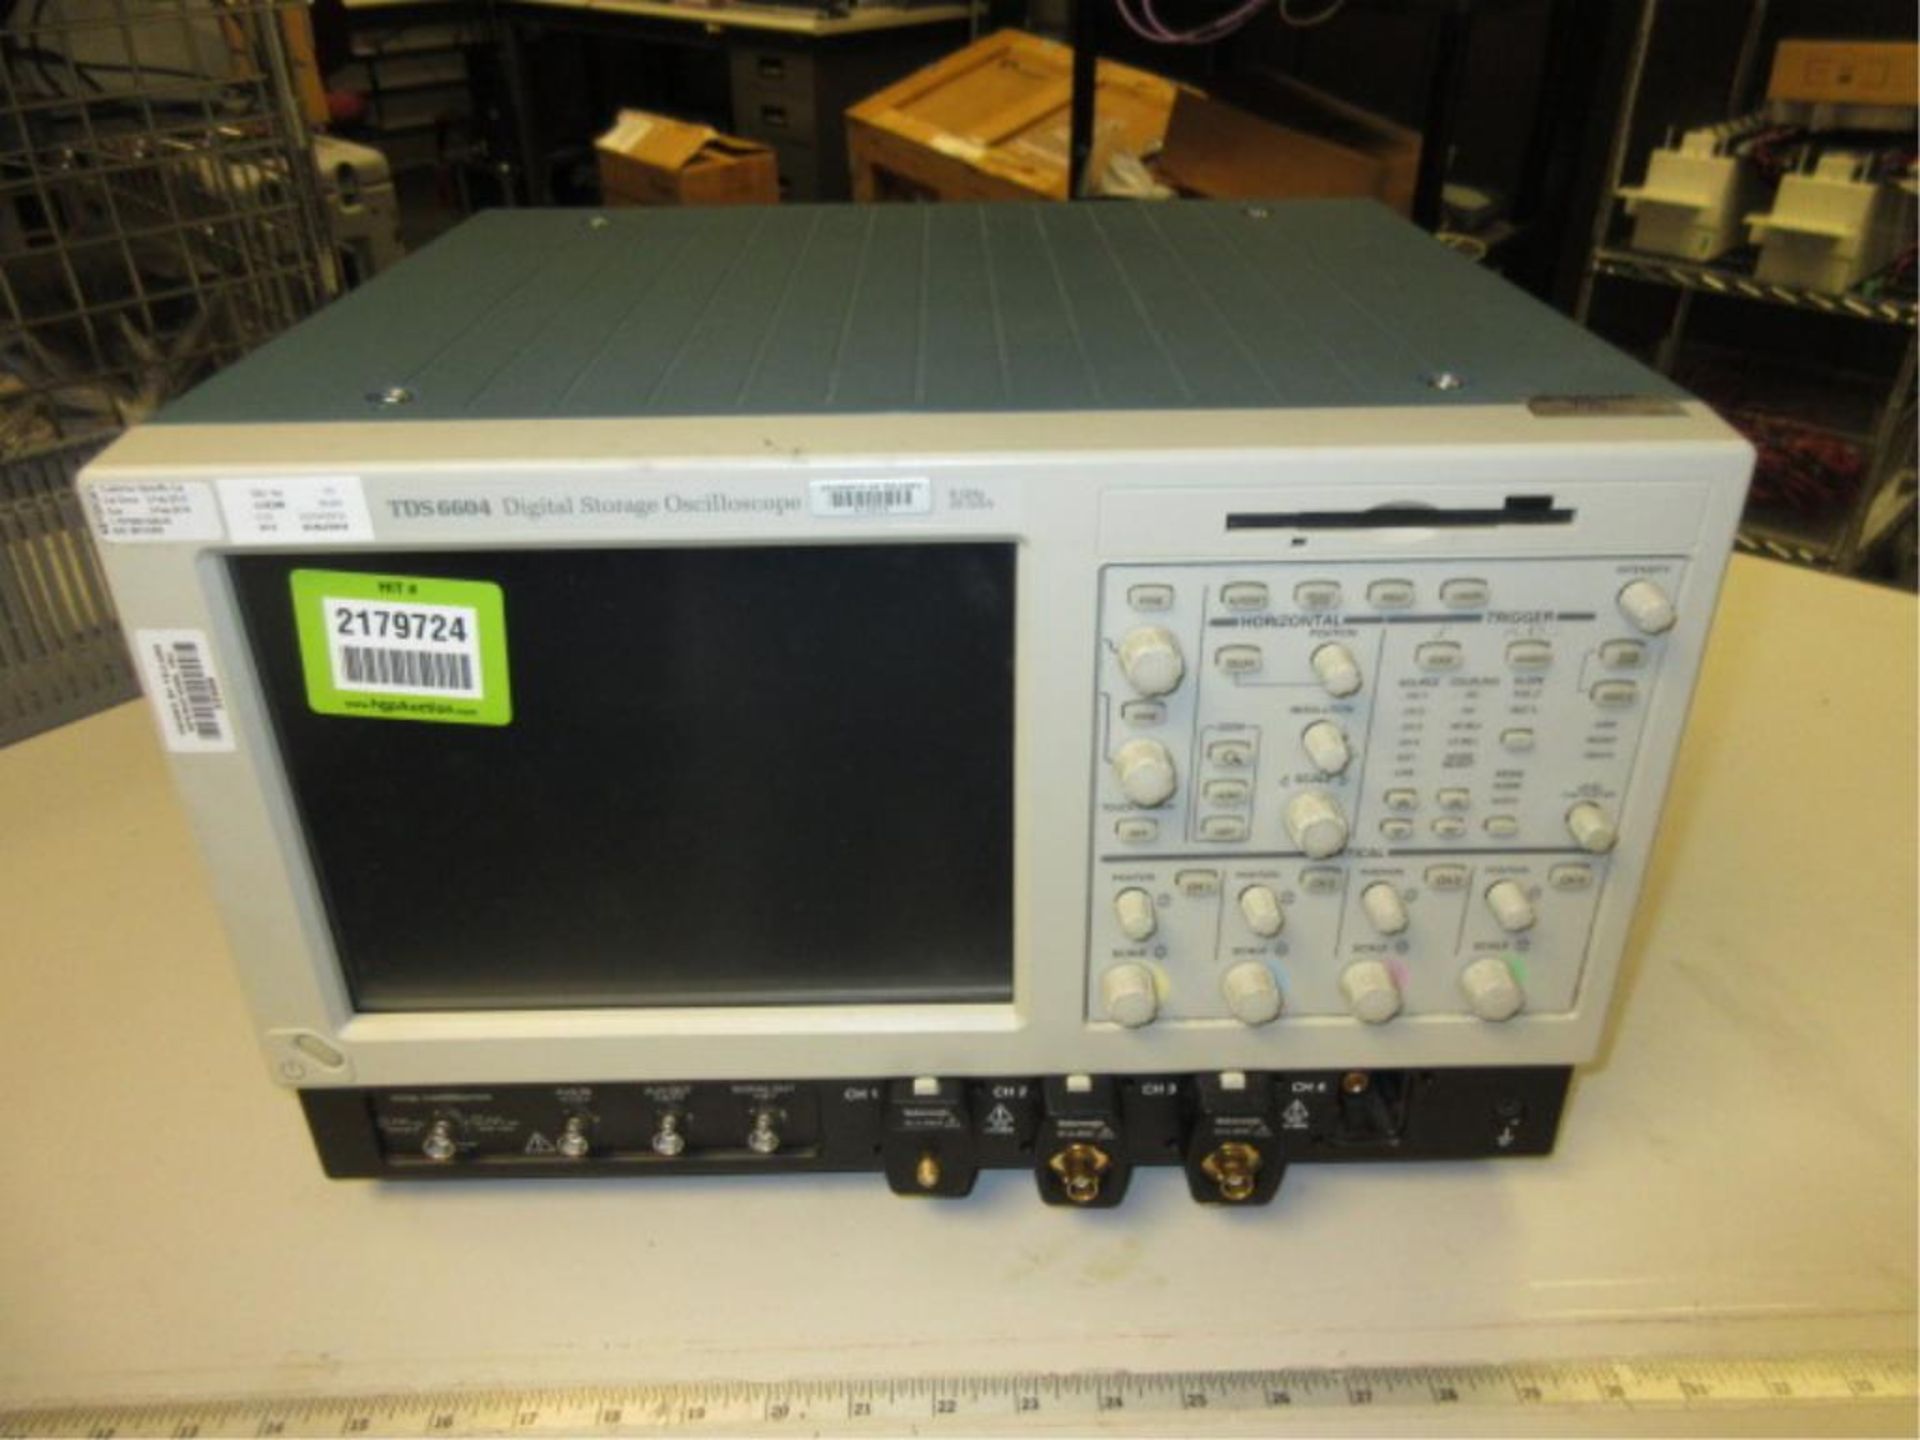 Tektronix TDS 6604 Digital Oscilloscope (for parts or repair). Digital Storage Oscilloscope, noted